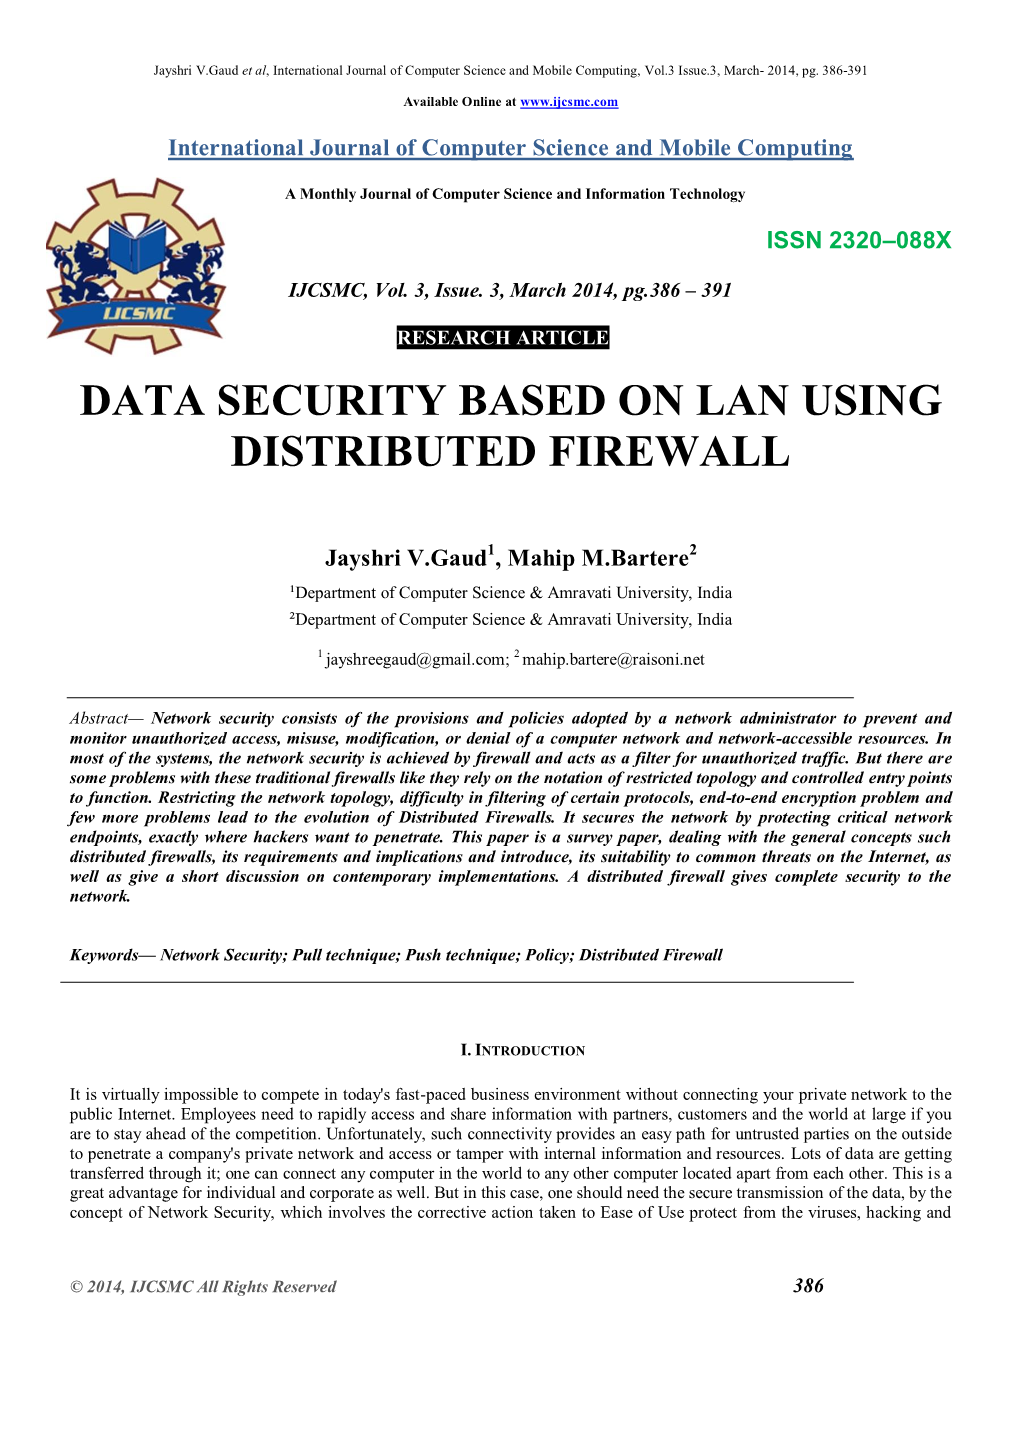 Data Security Based on Lan Using Distributed Firewall